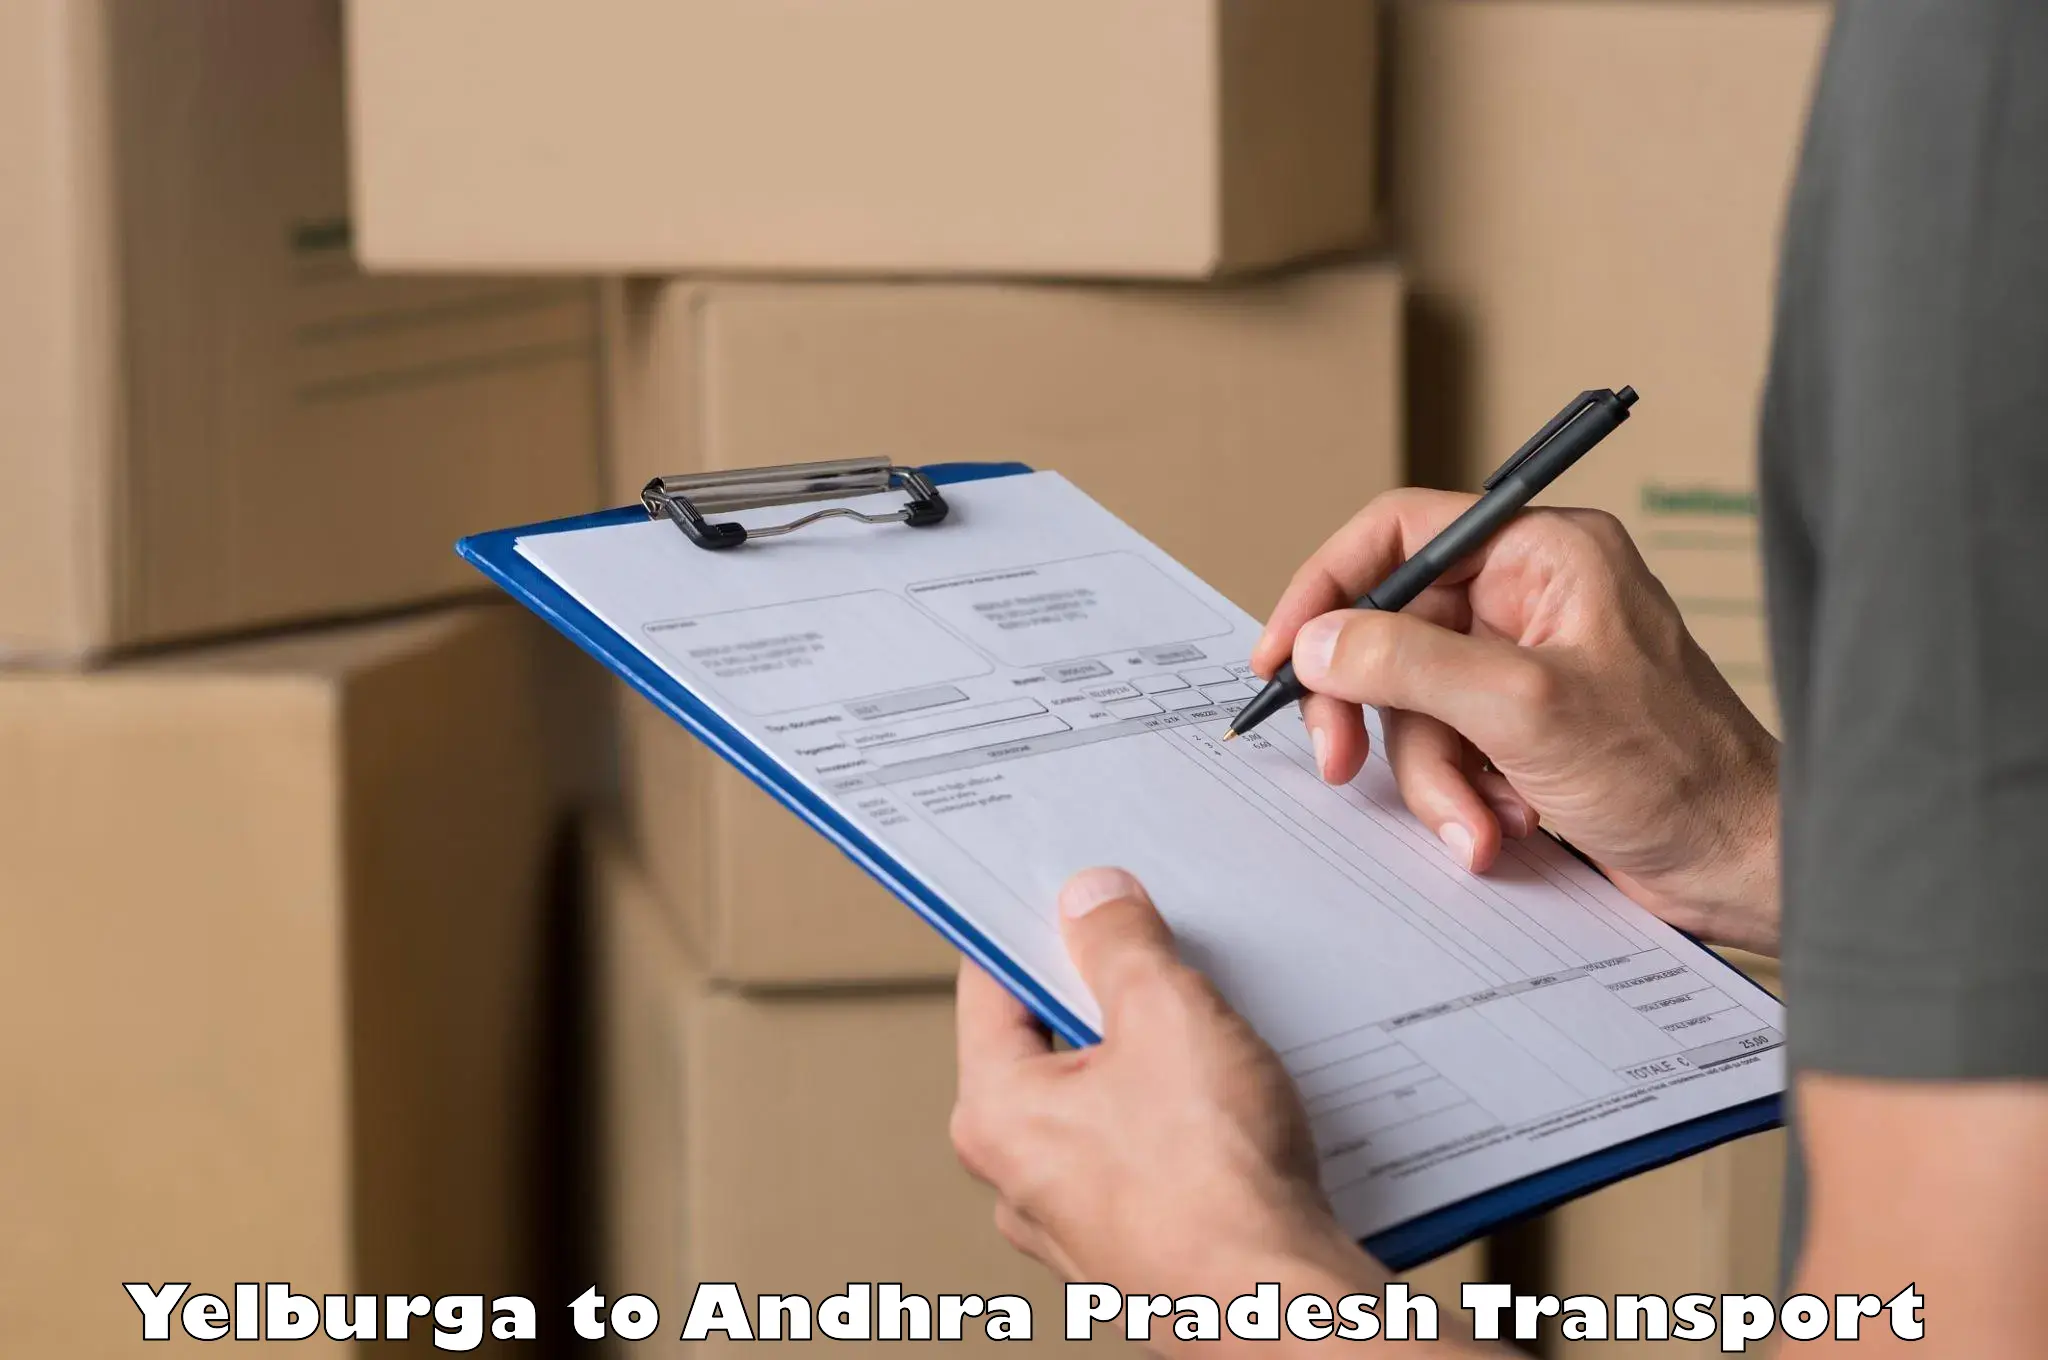 Shipping partner Yelburga to Changaroth